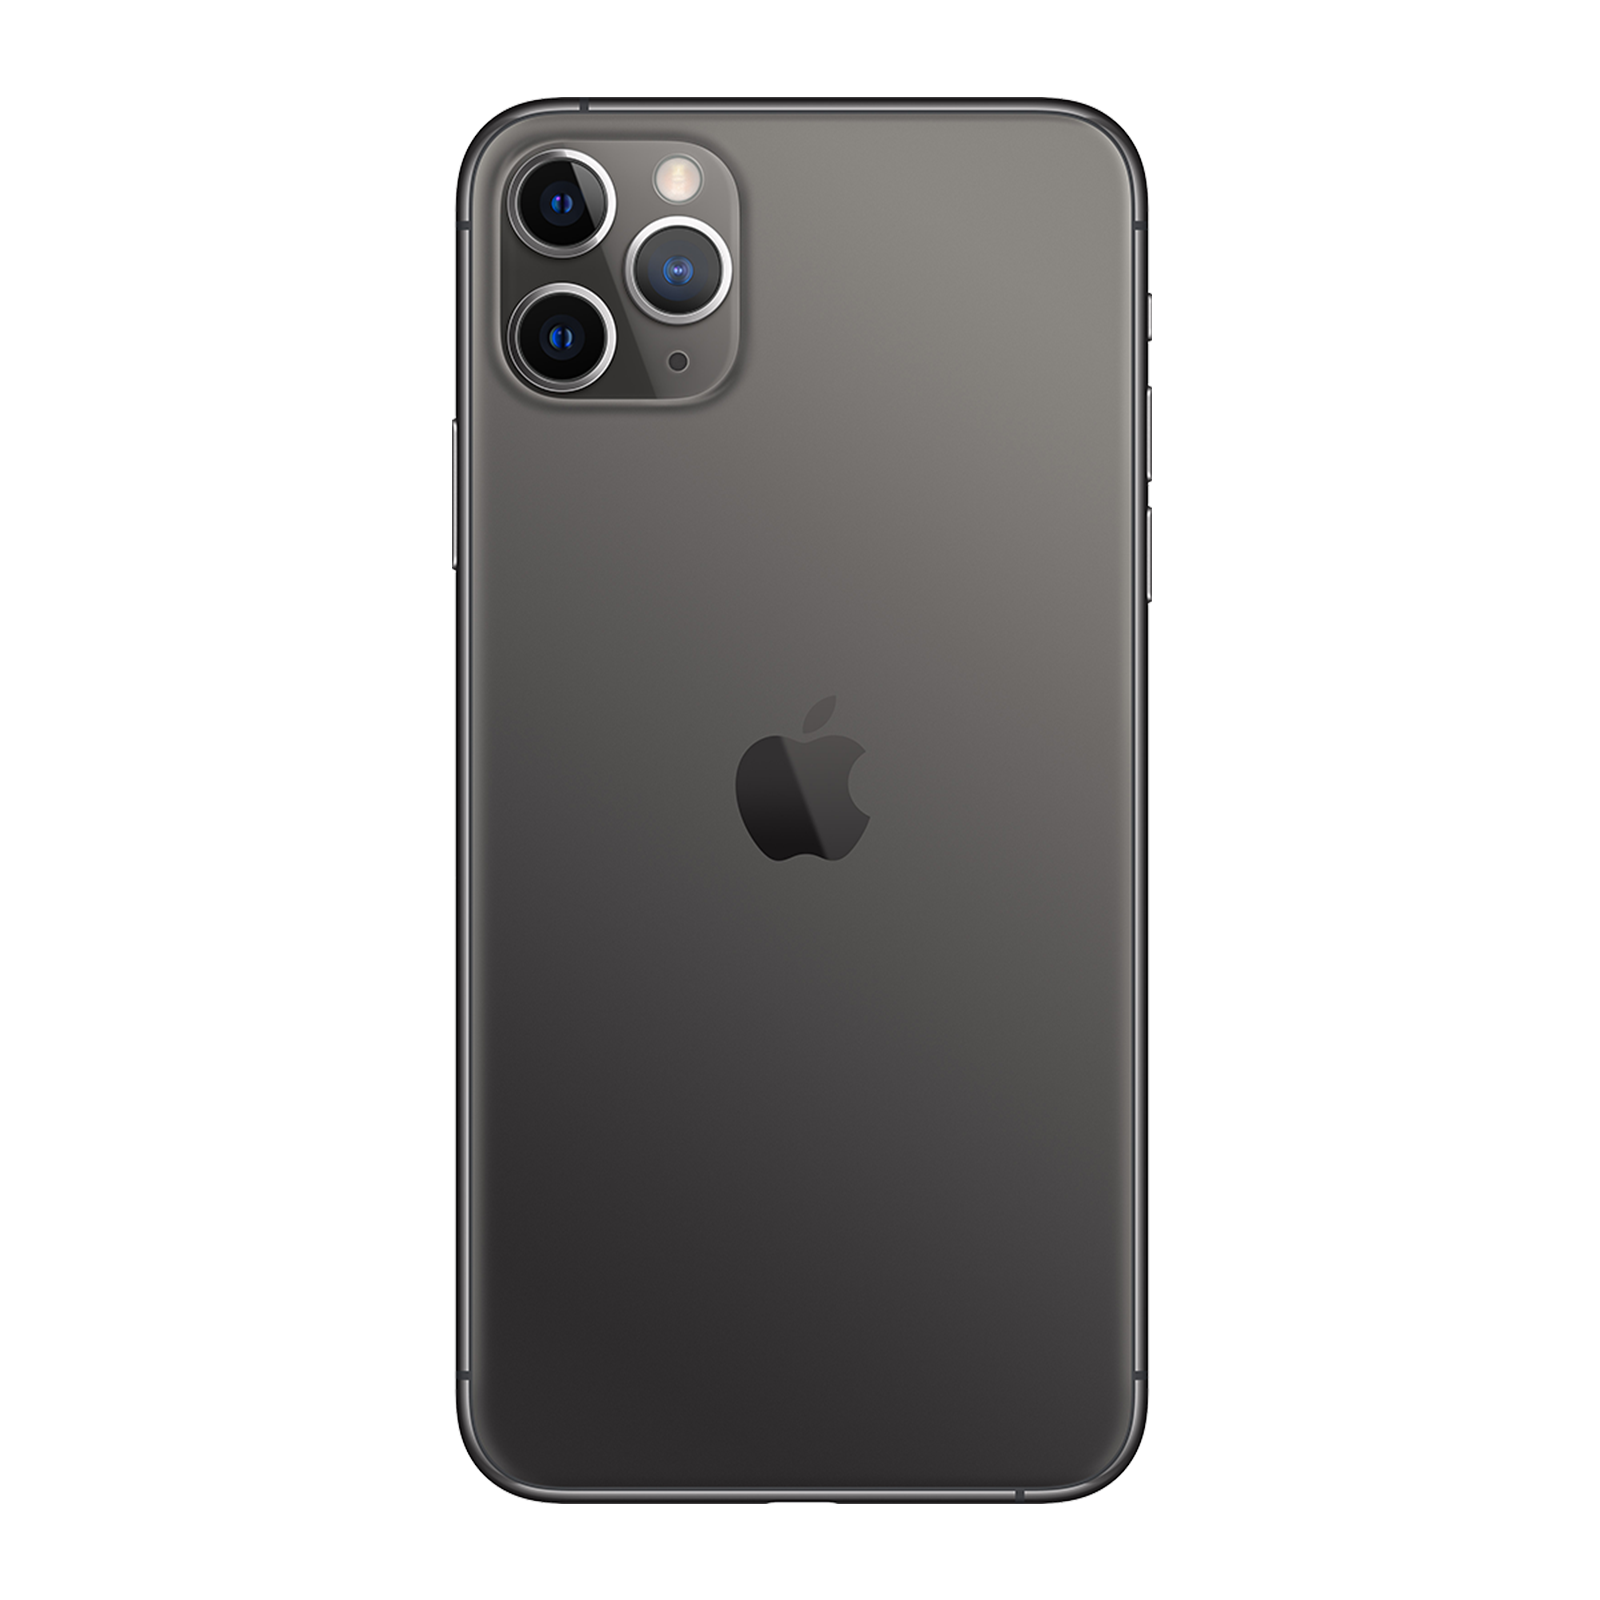 Apple iPhone 11 Pro 512GB Space Grey Very Good - Unlocked